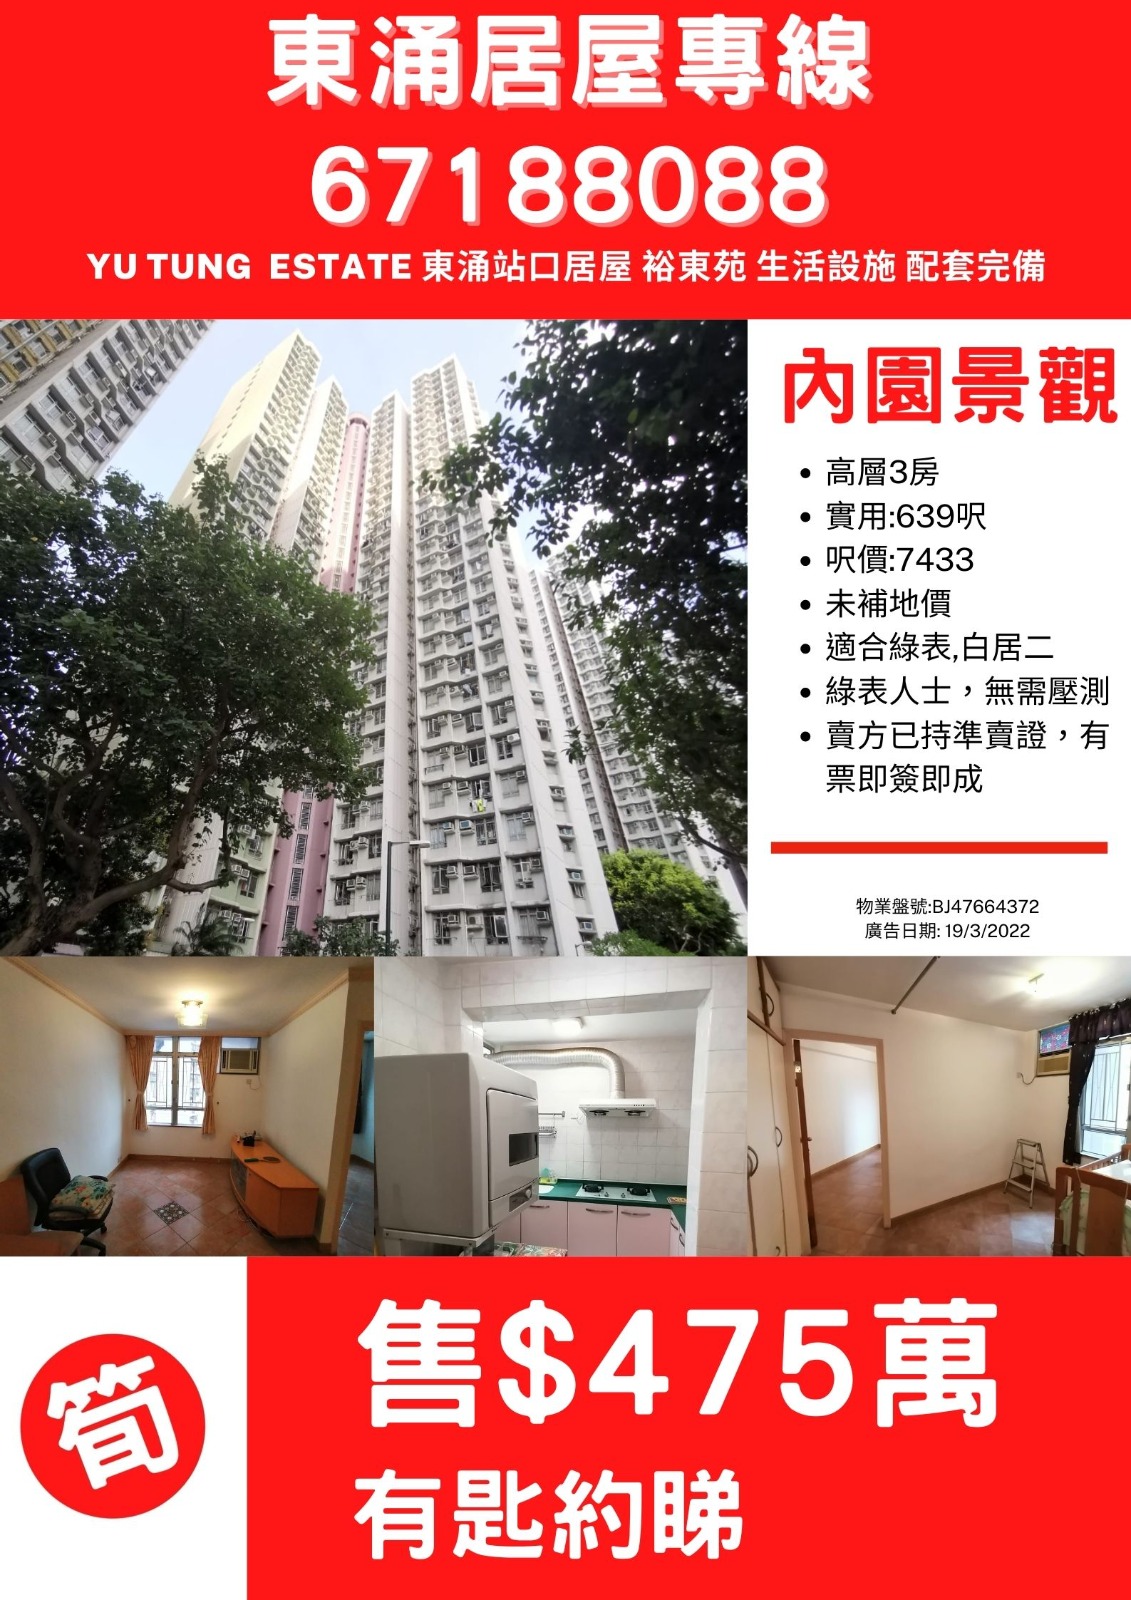  Tung Chung 站旁居屋，高層三房，內園樓景，有票即簽即成 67188088 陳生